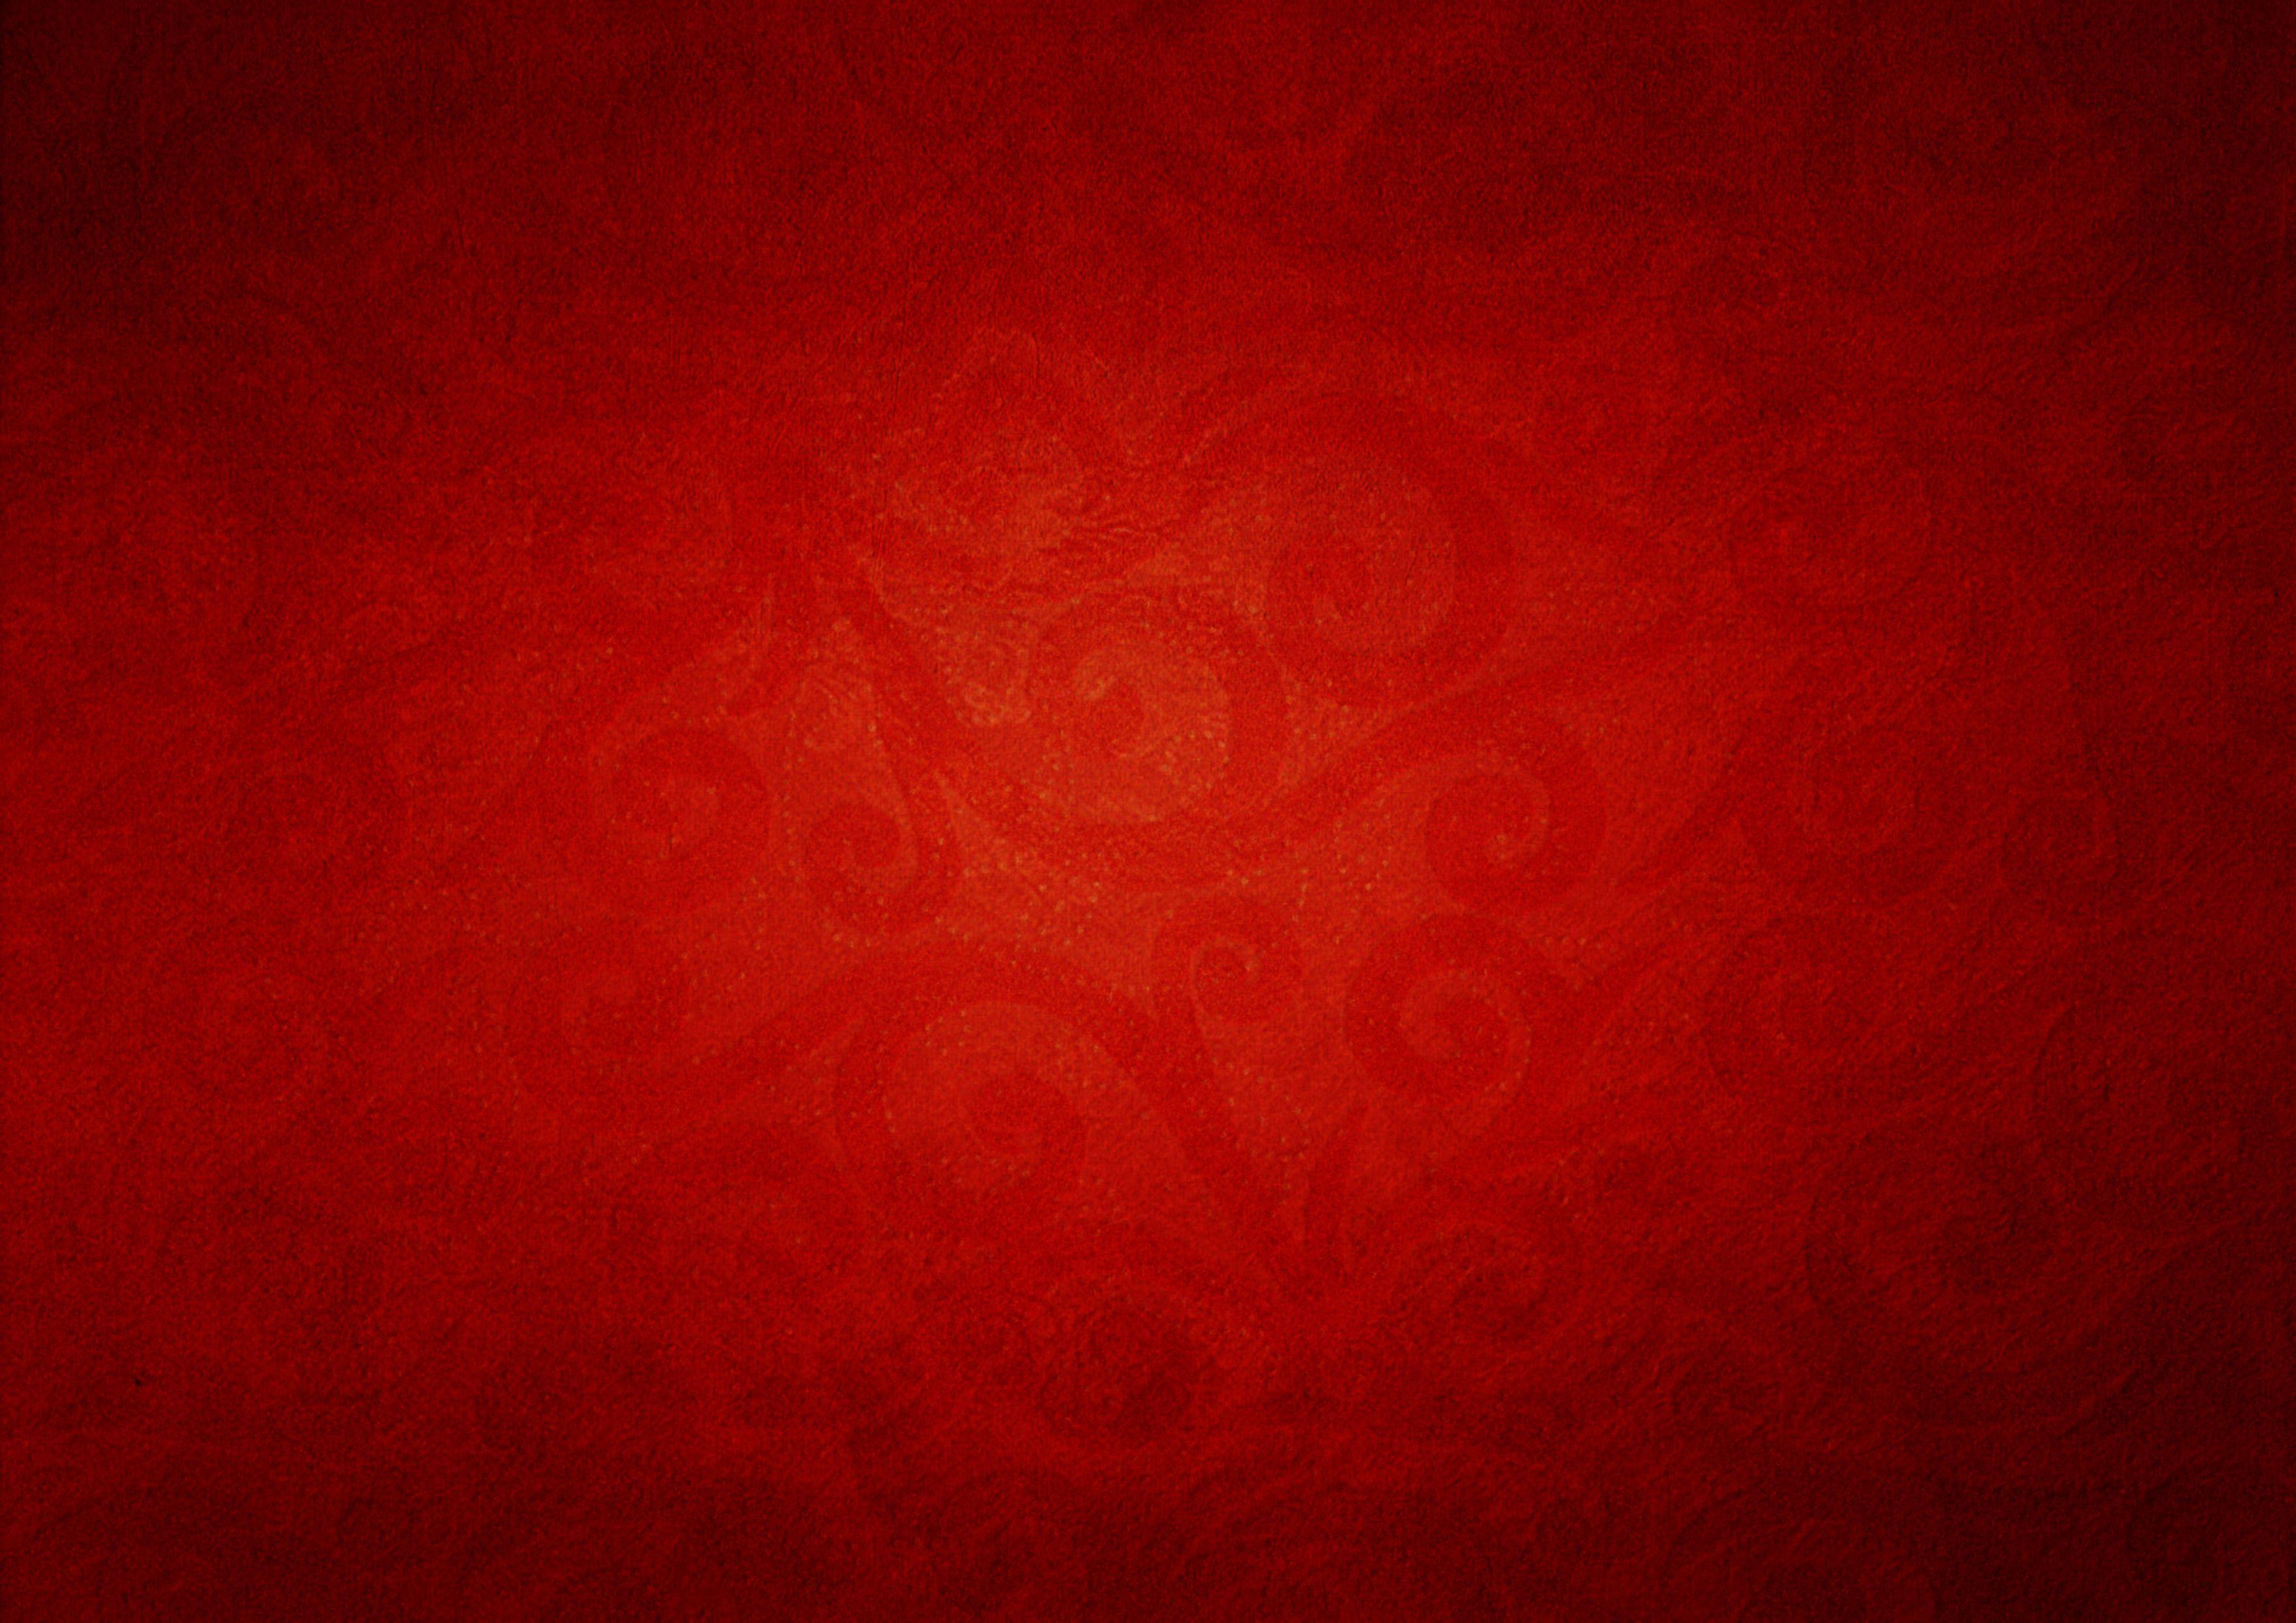 red background Large Image. Photo editing back grounds